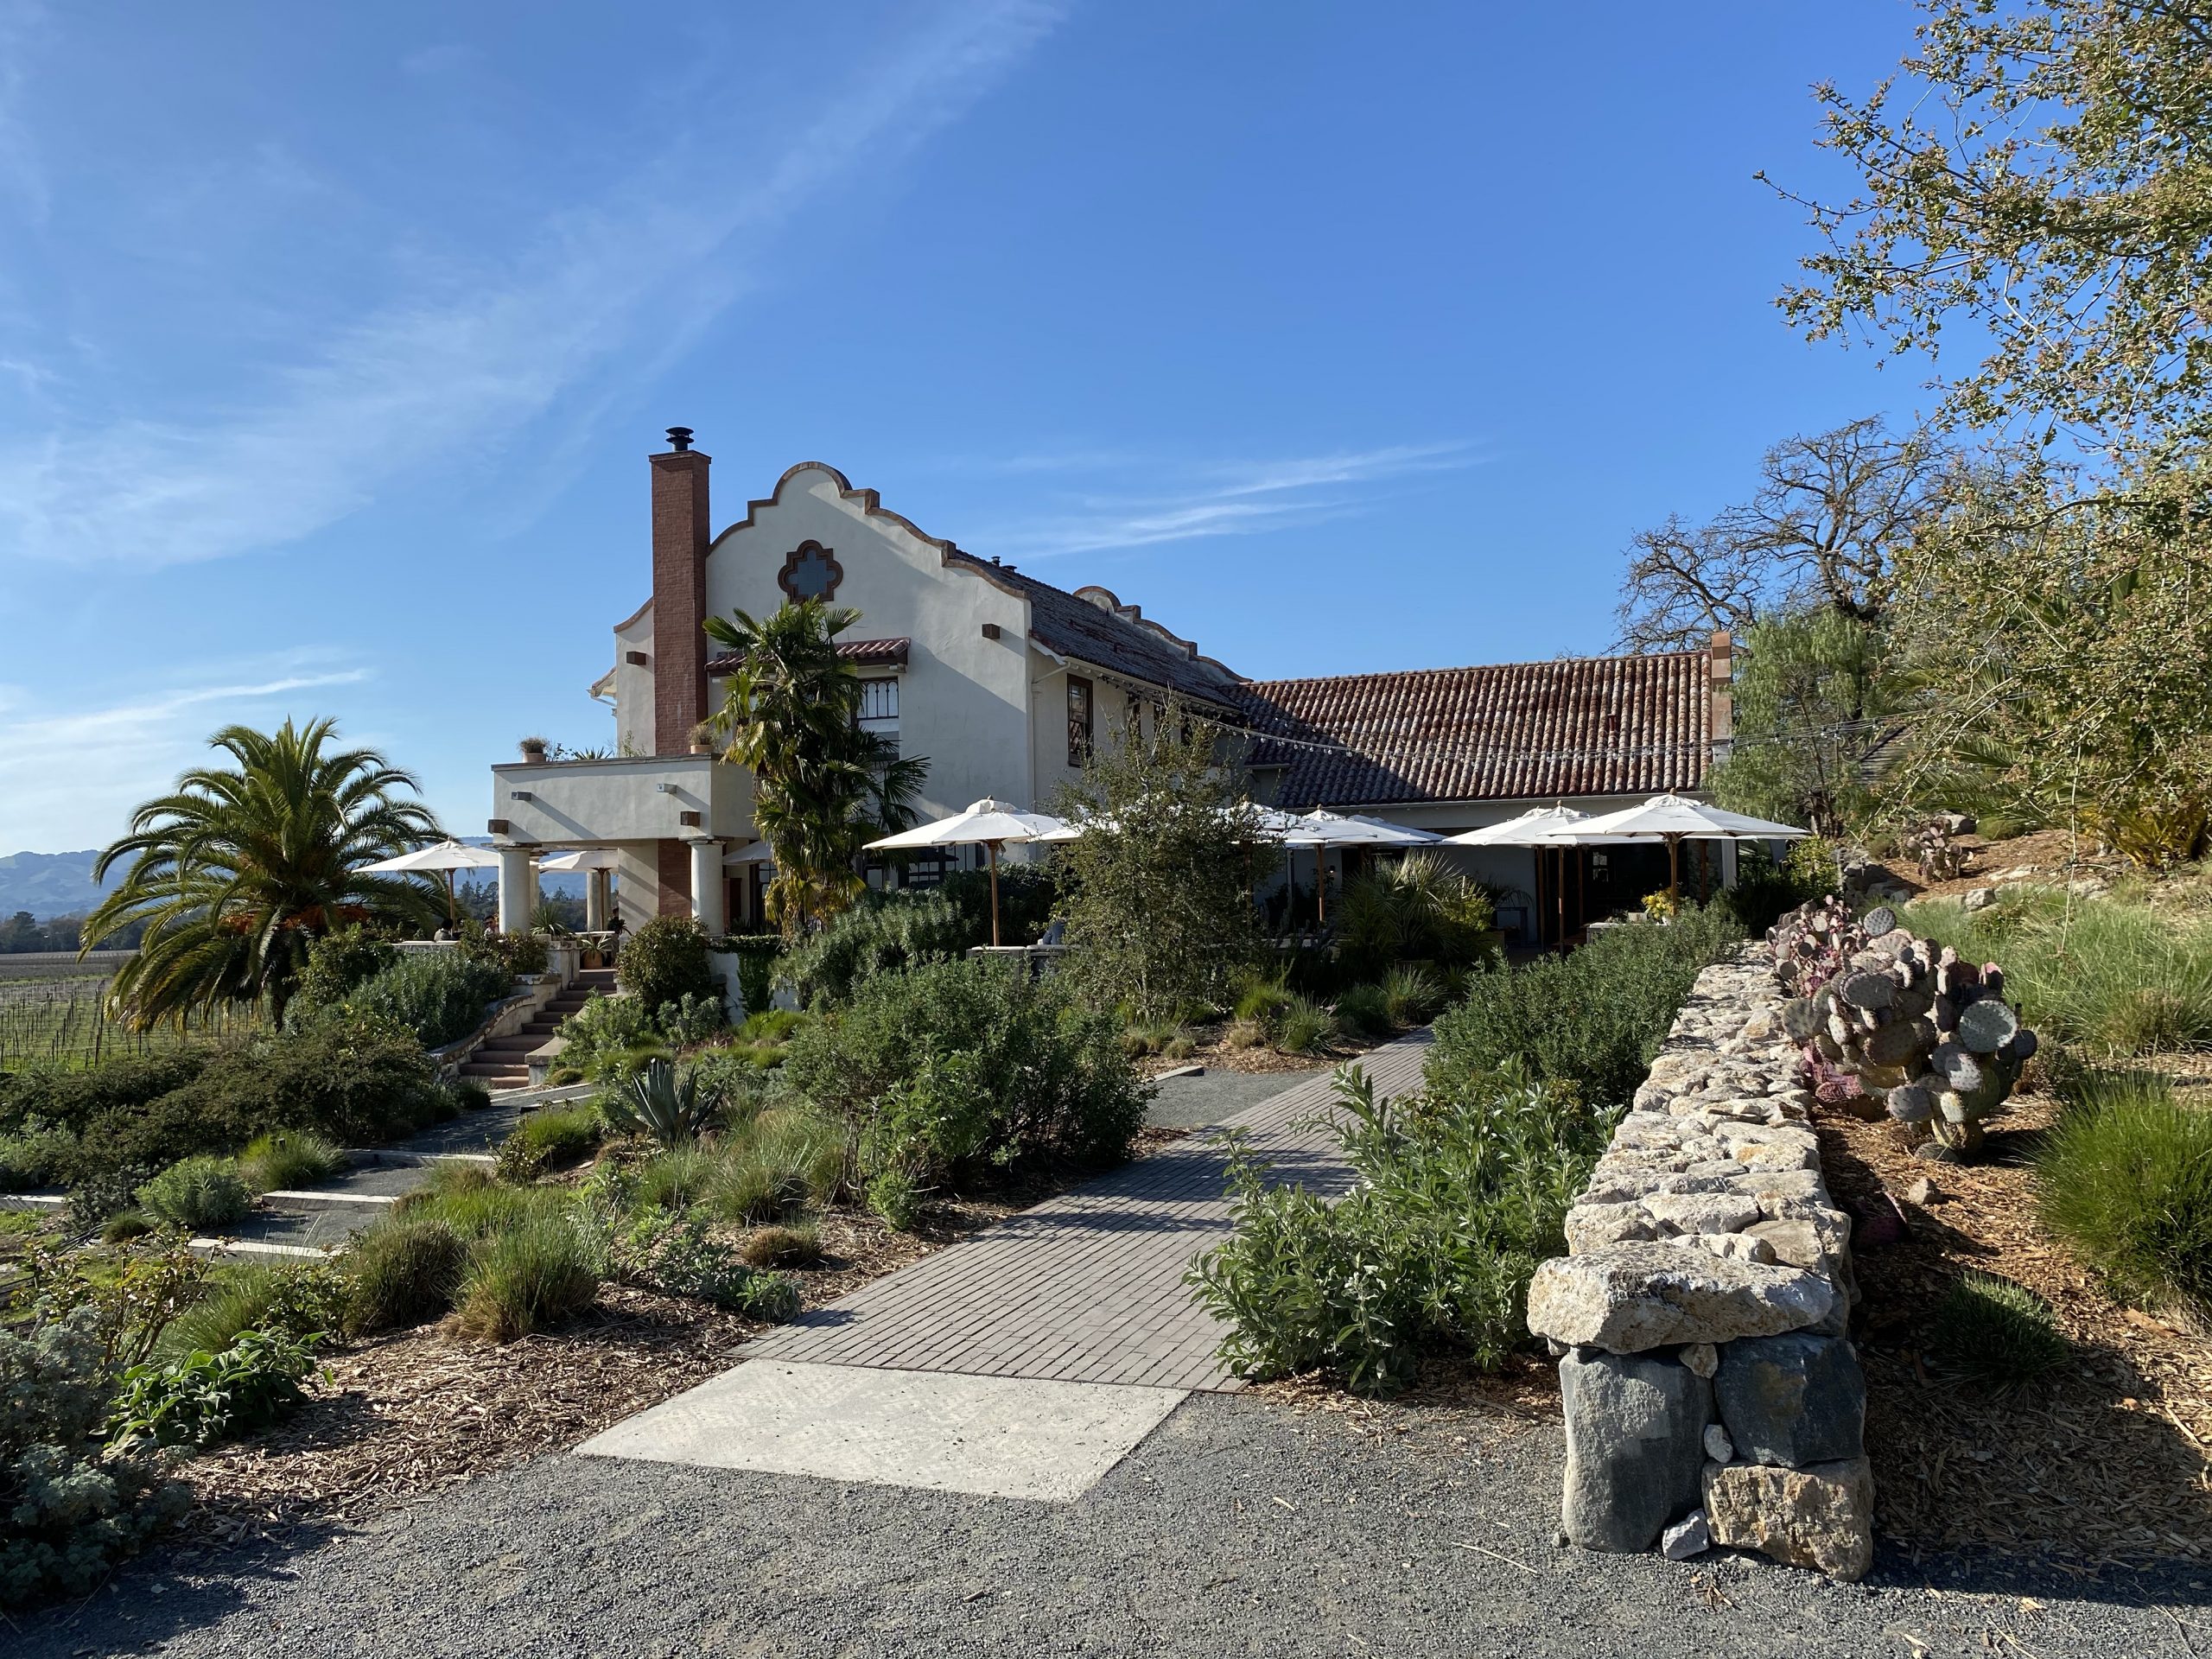 Visiting Scribe Winery in Sonoma, California